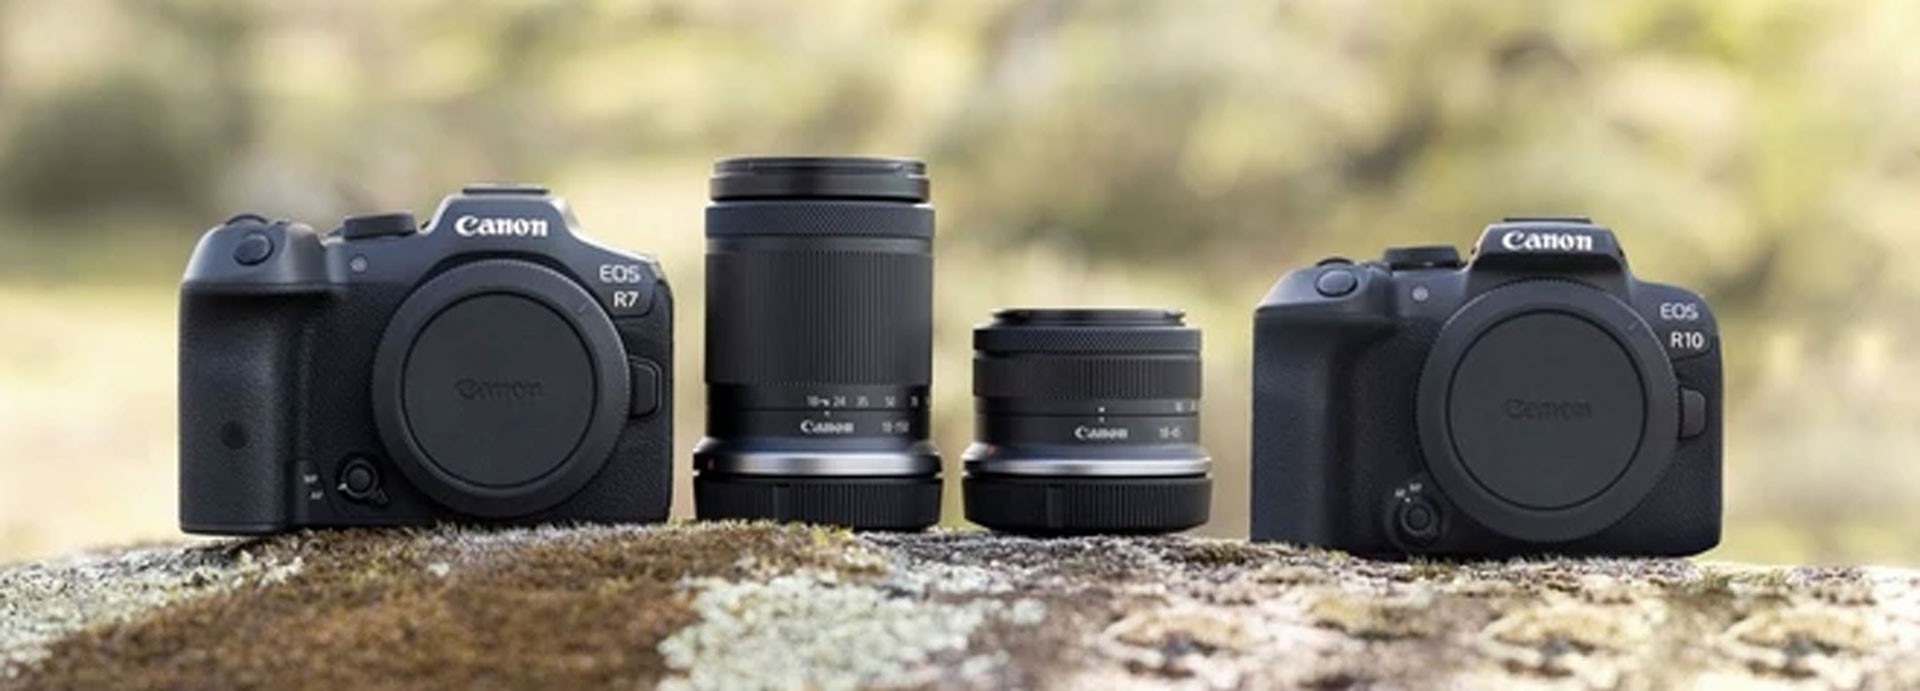 Canon EOS R7 i EOS R10 - bezlusterkowce na każdą kieszeń?